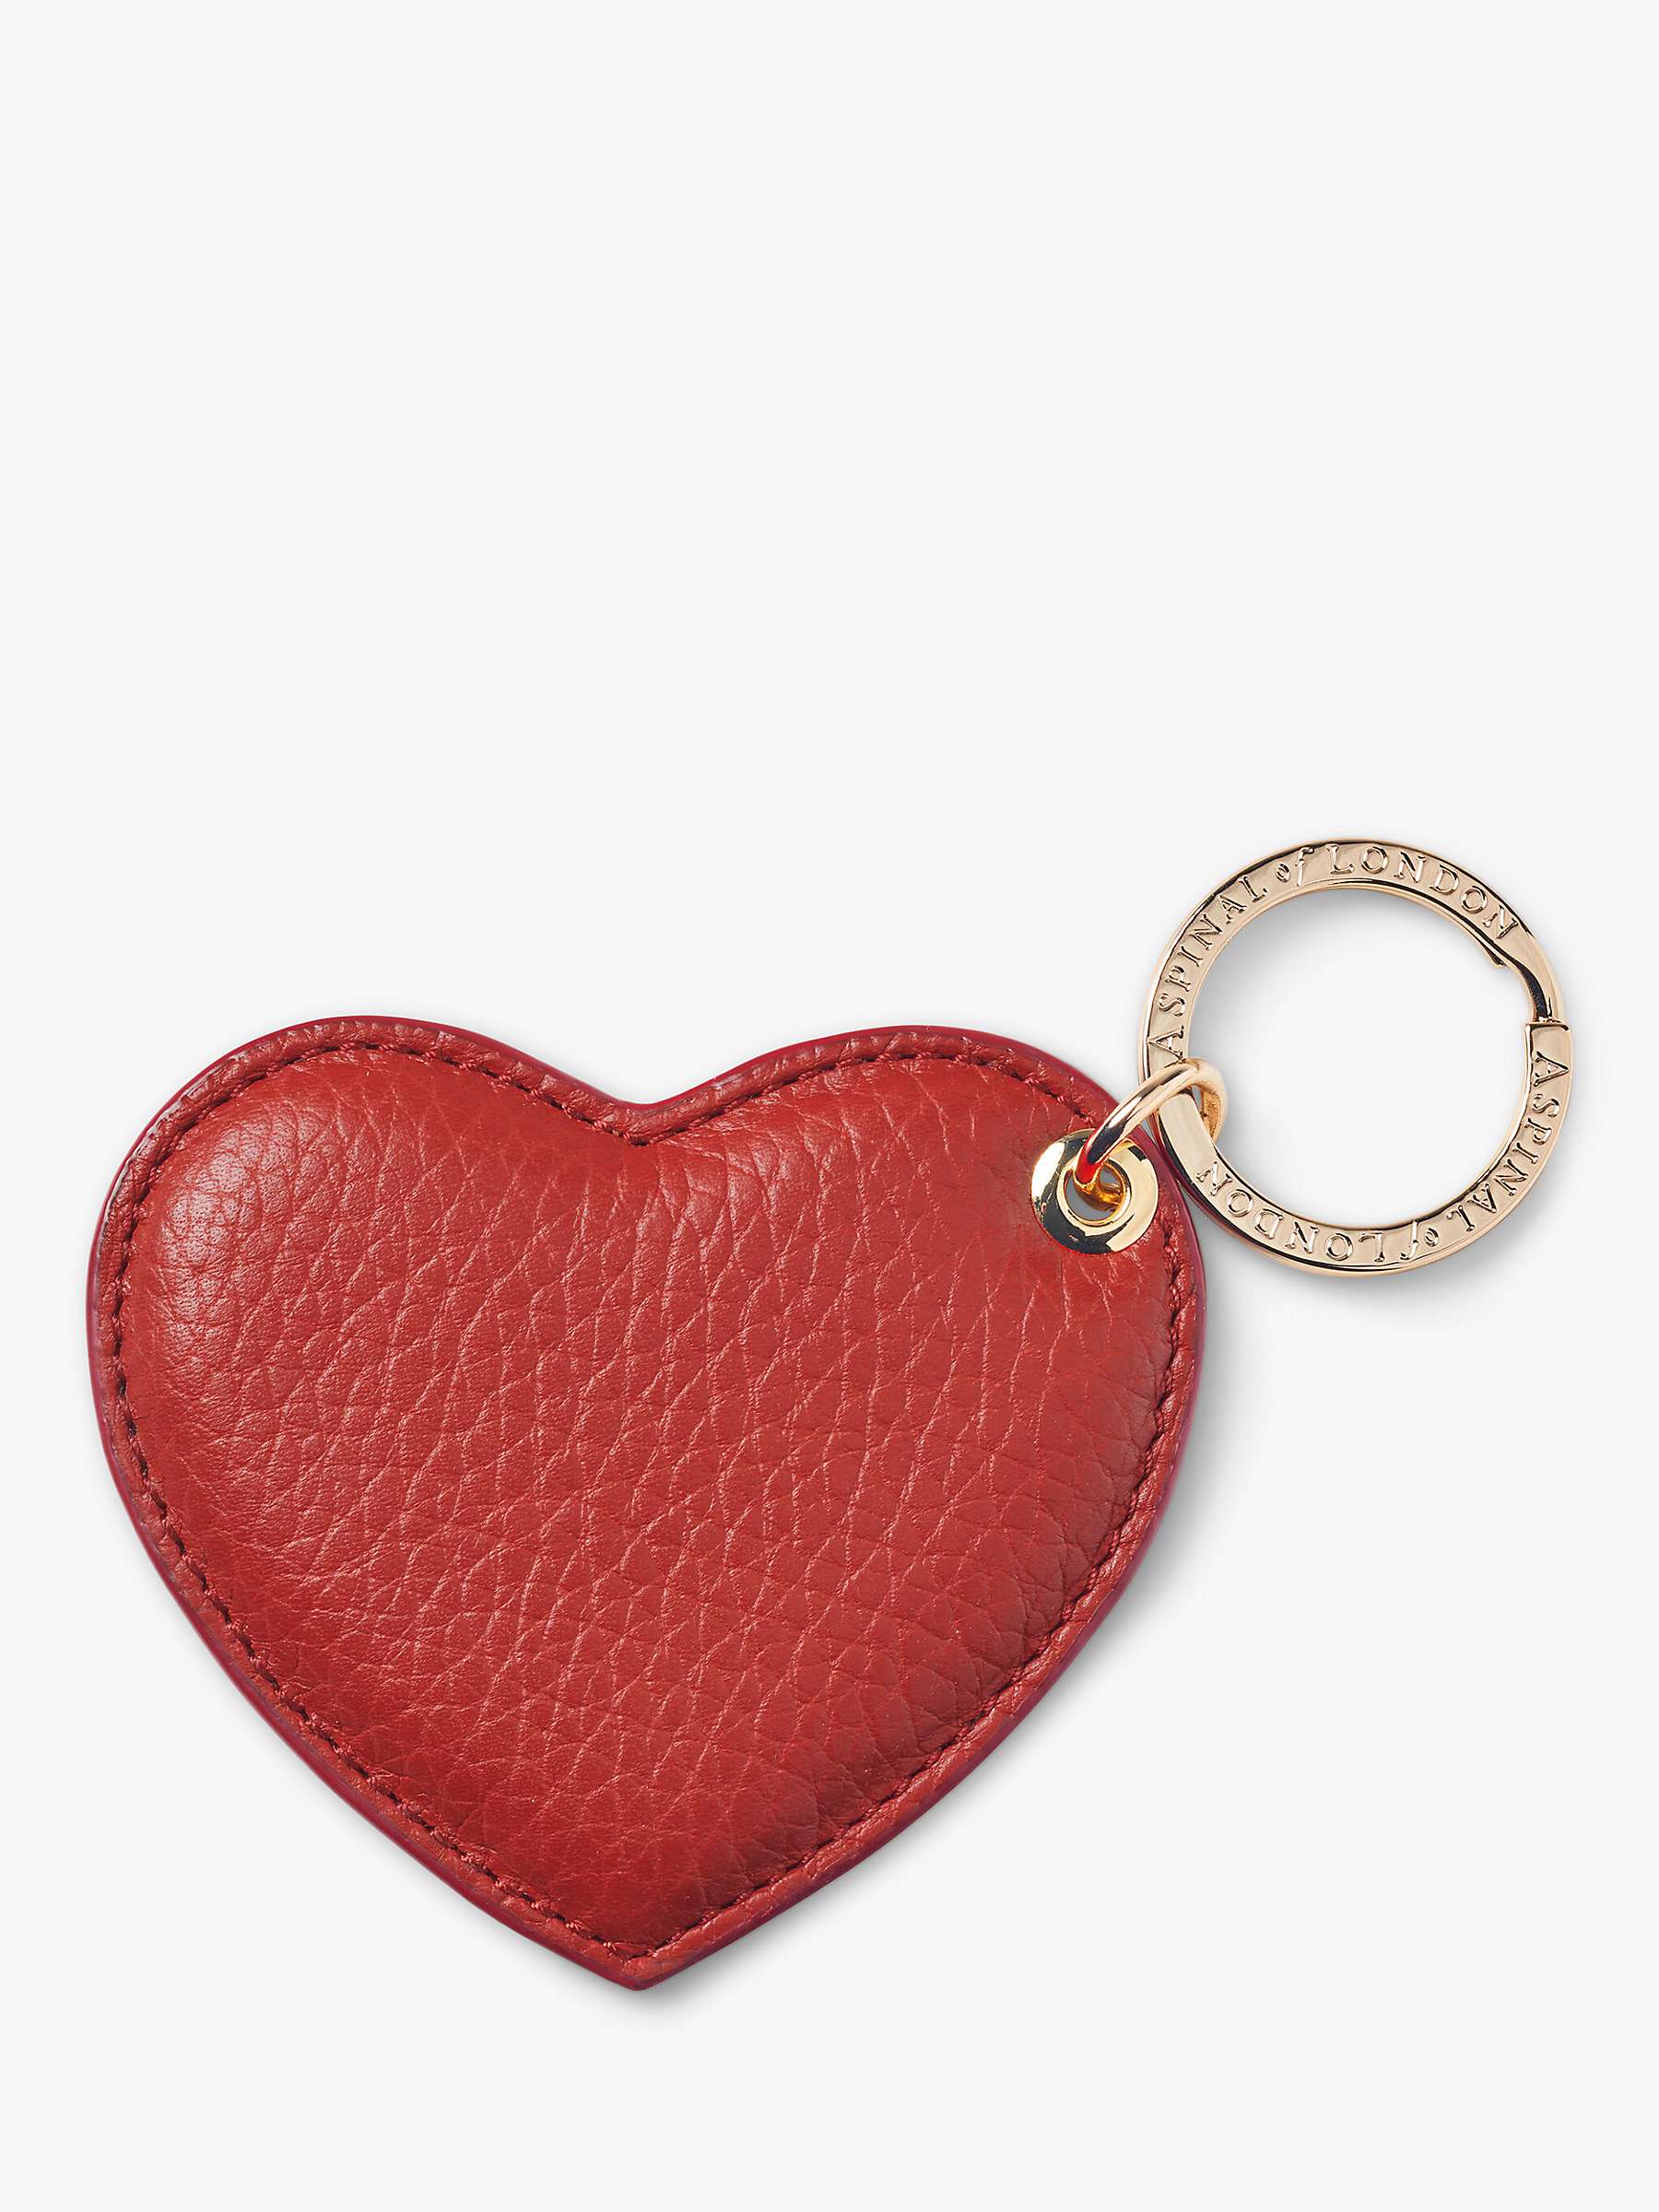 Buy Aspinal of London Leather Heart Keyring Online at johnlewis.com